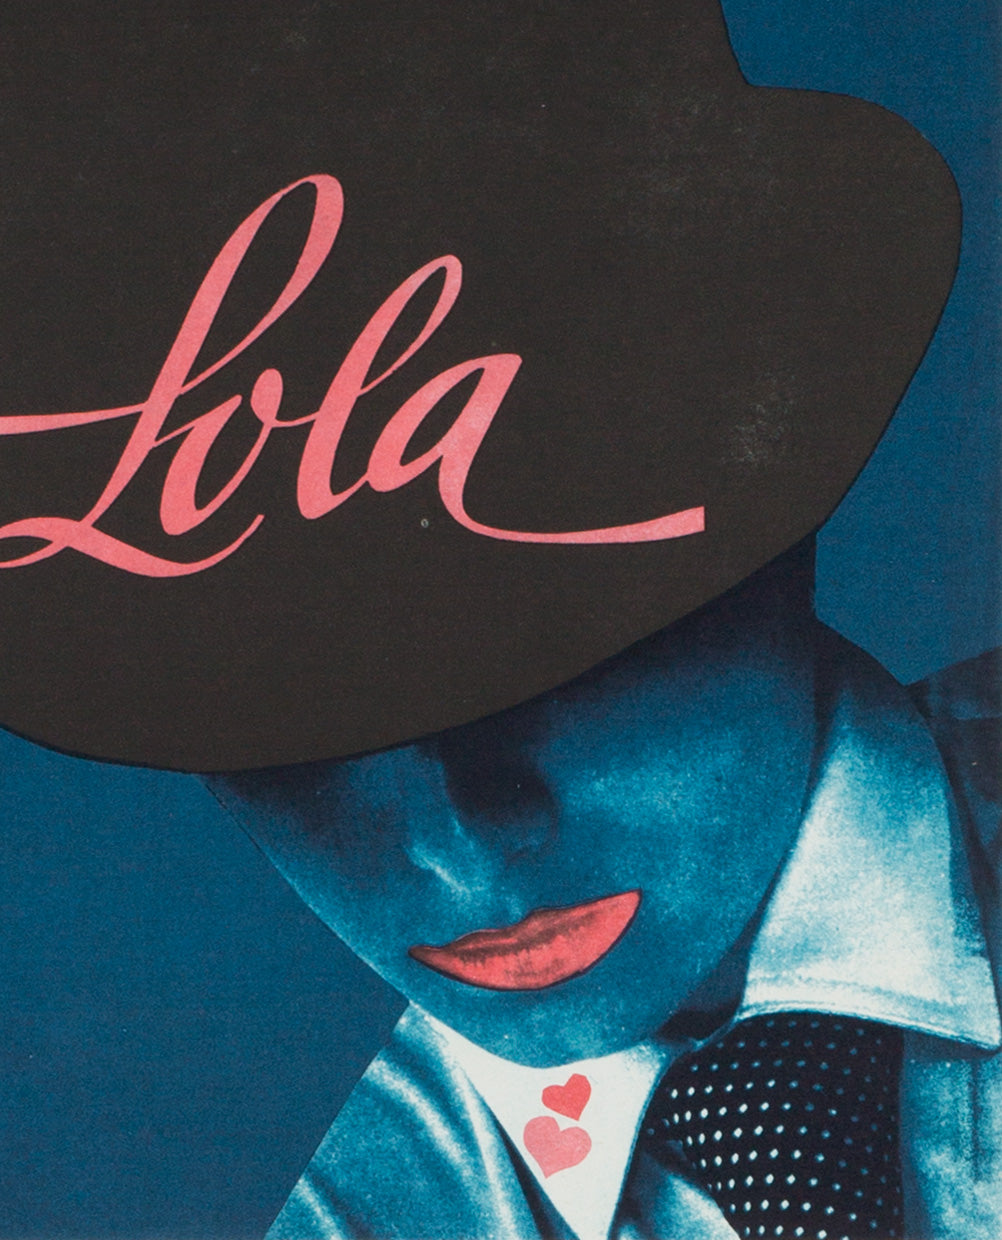 Lola 1983 Czech A3 Film Poster, Seccik - Orson & Welles